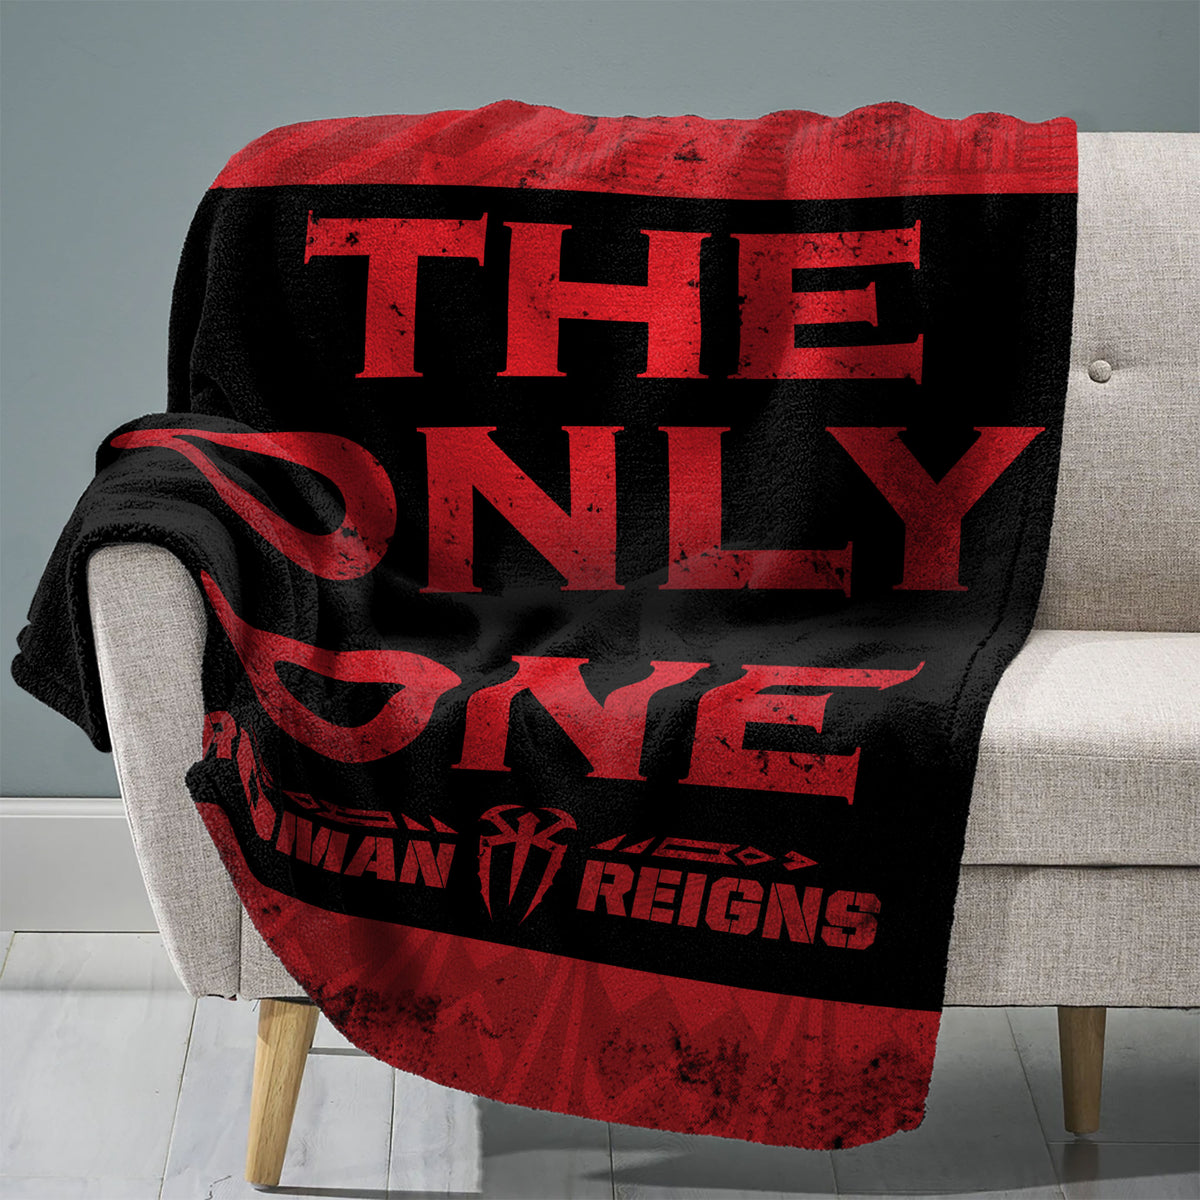 WWE Roman Reigns 60” x 80” Raschel Plush Blanket - The Only One